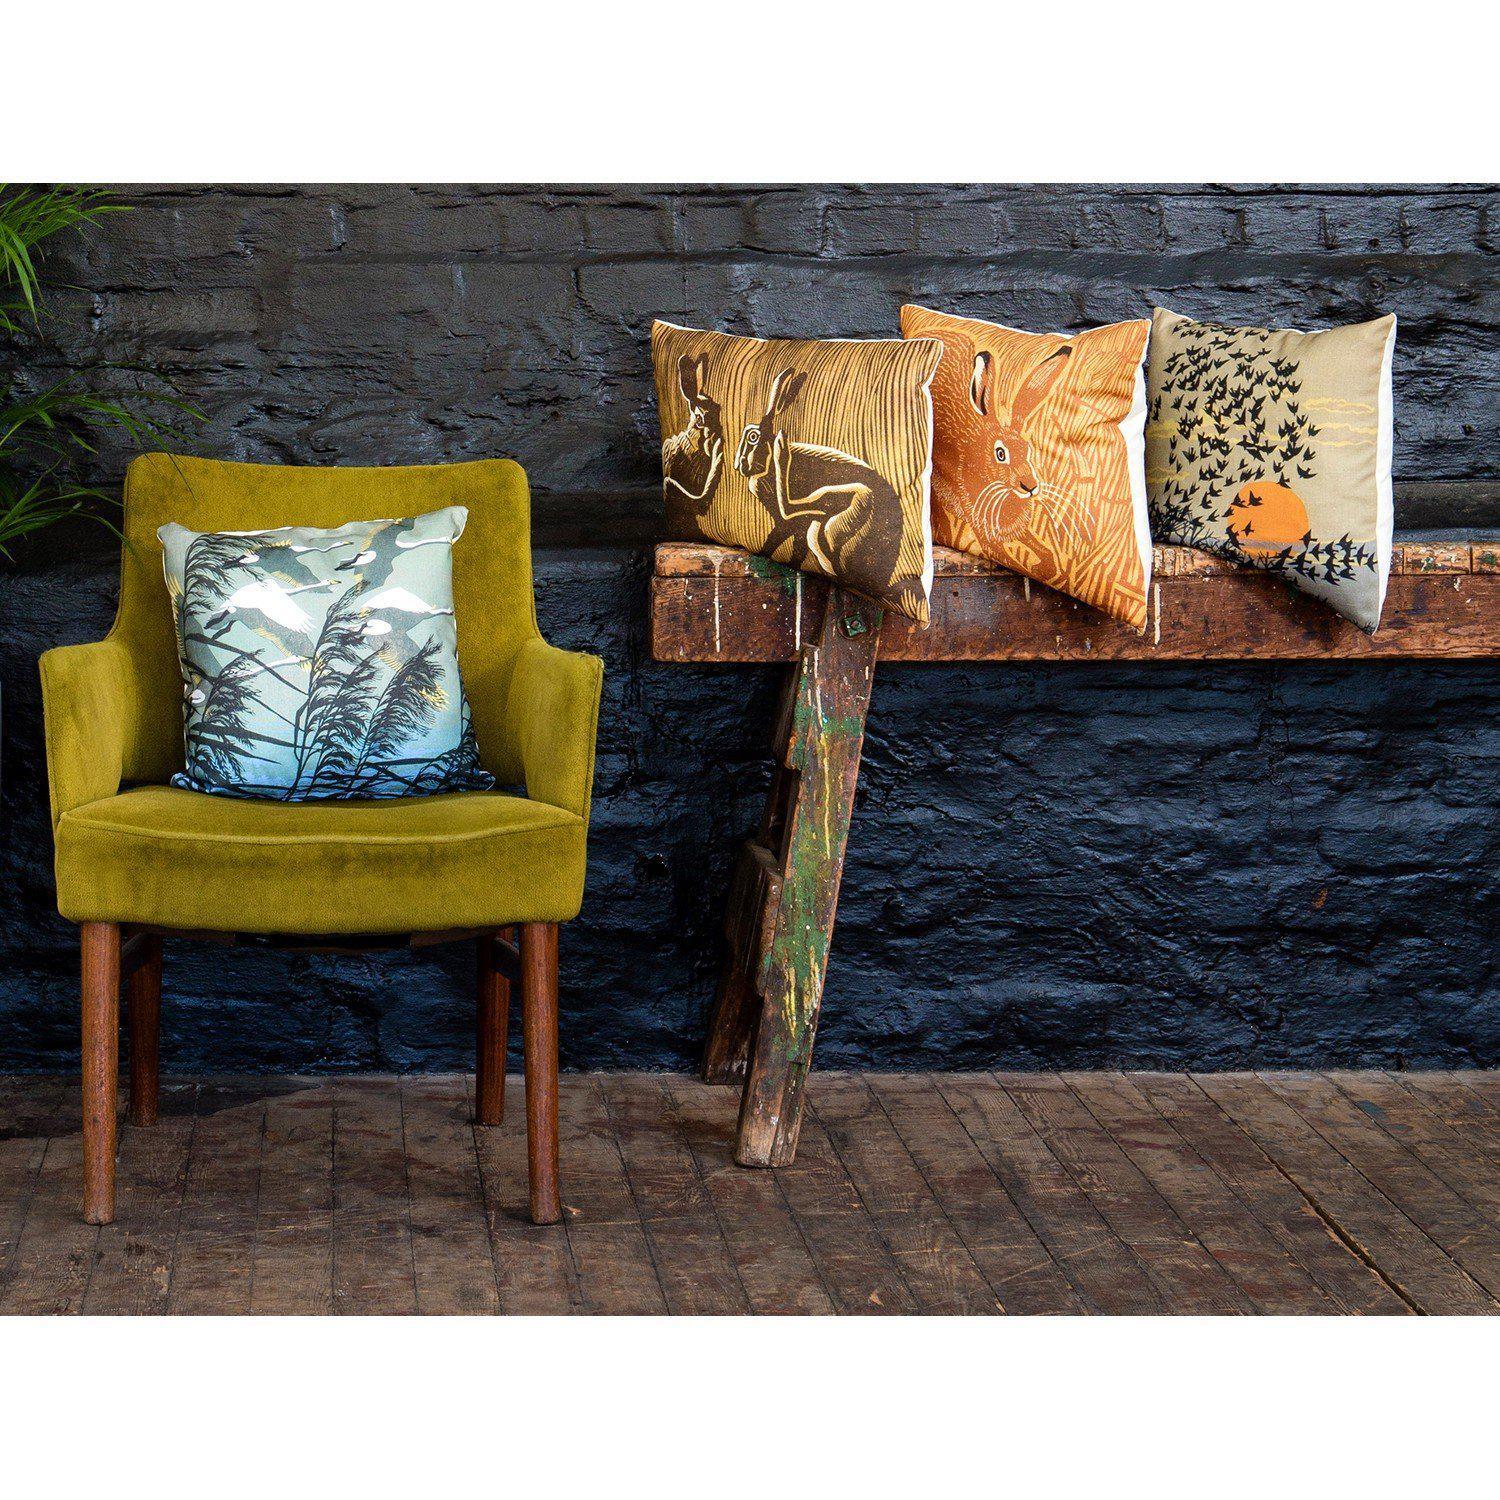 Warbler & Autumn Leaves - Mary Evans Cushion - Handmade Cushions UK - WeLoveCushions